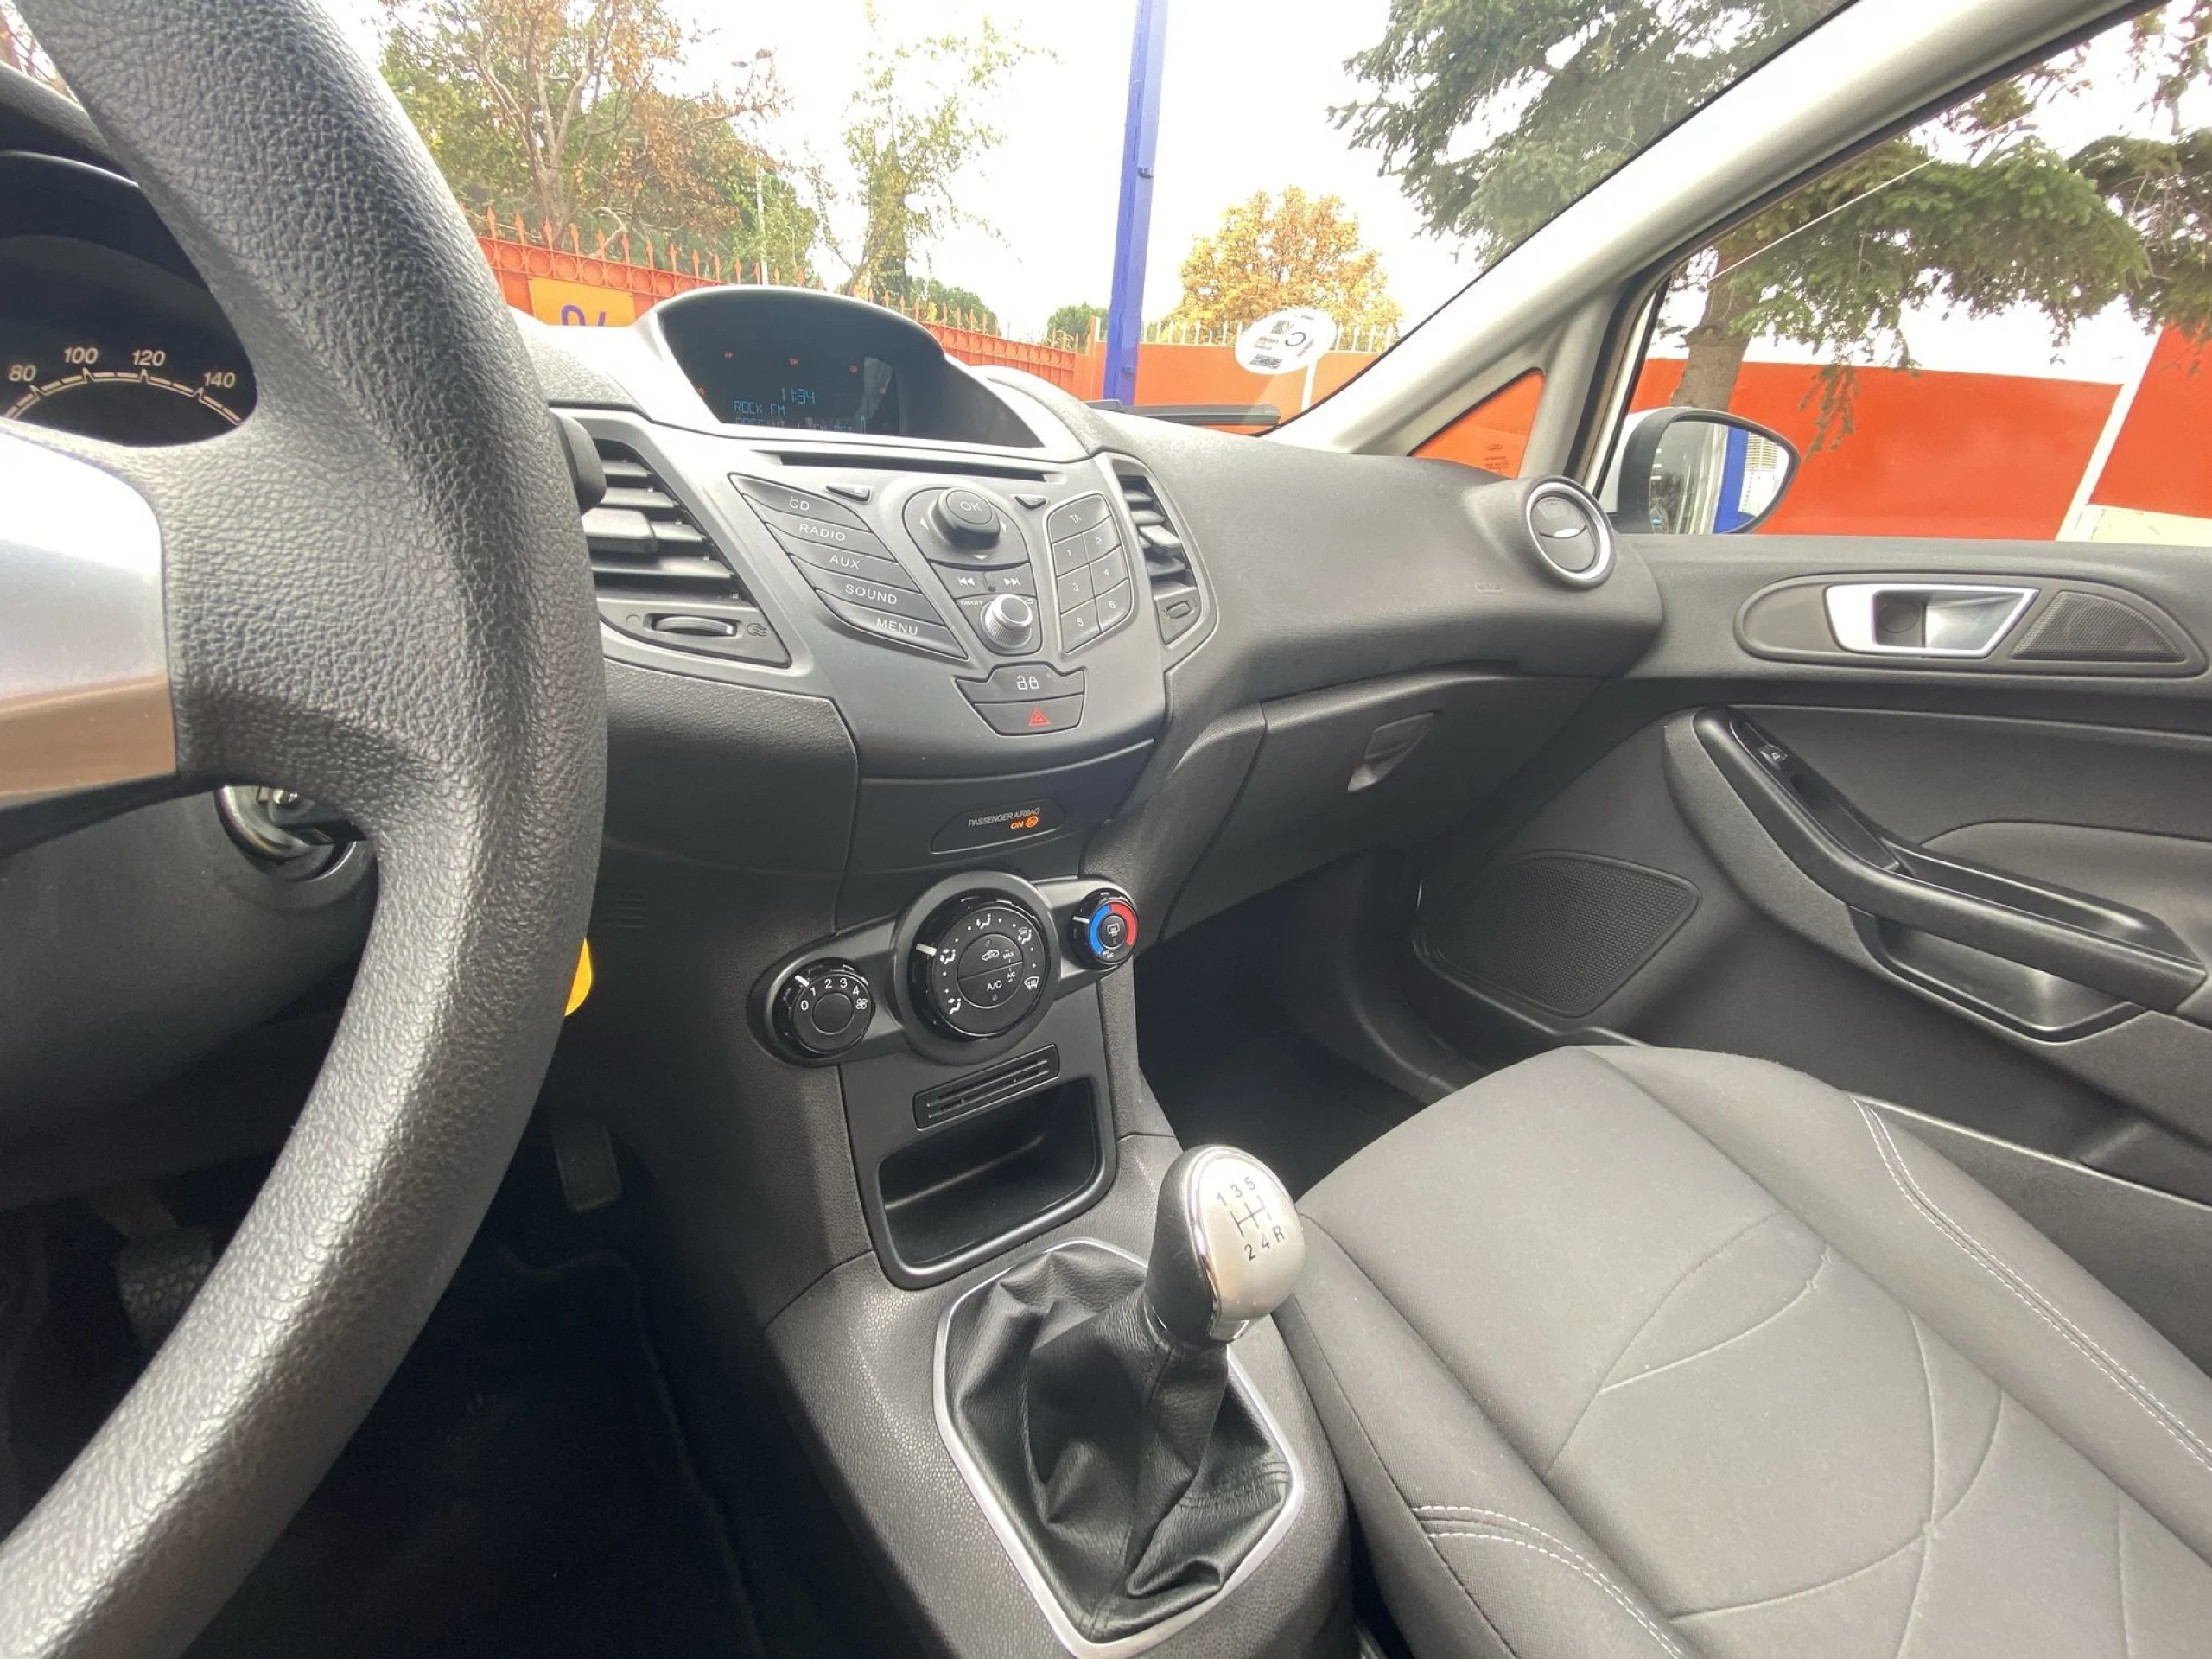 Ford Fiesta 1.25 Duratec Trend 60 kW (82 CV) - Foto 16